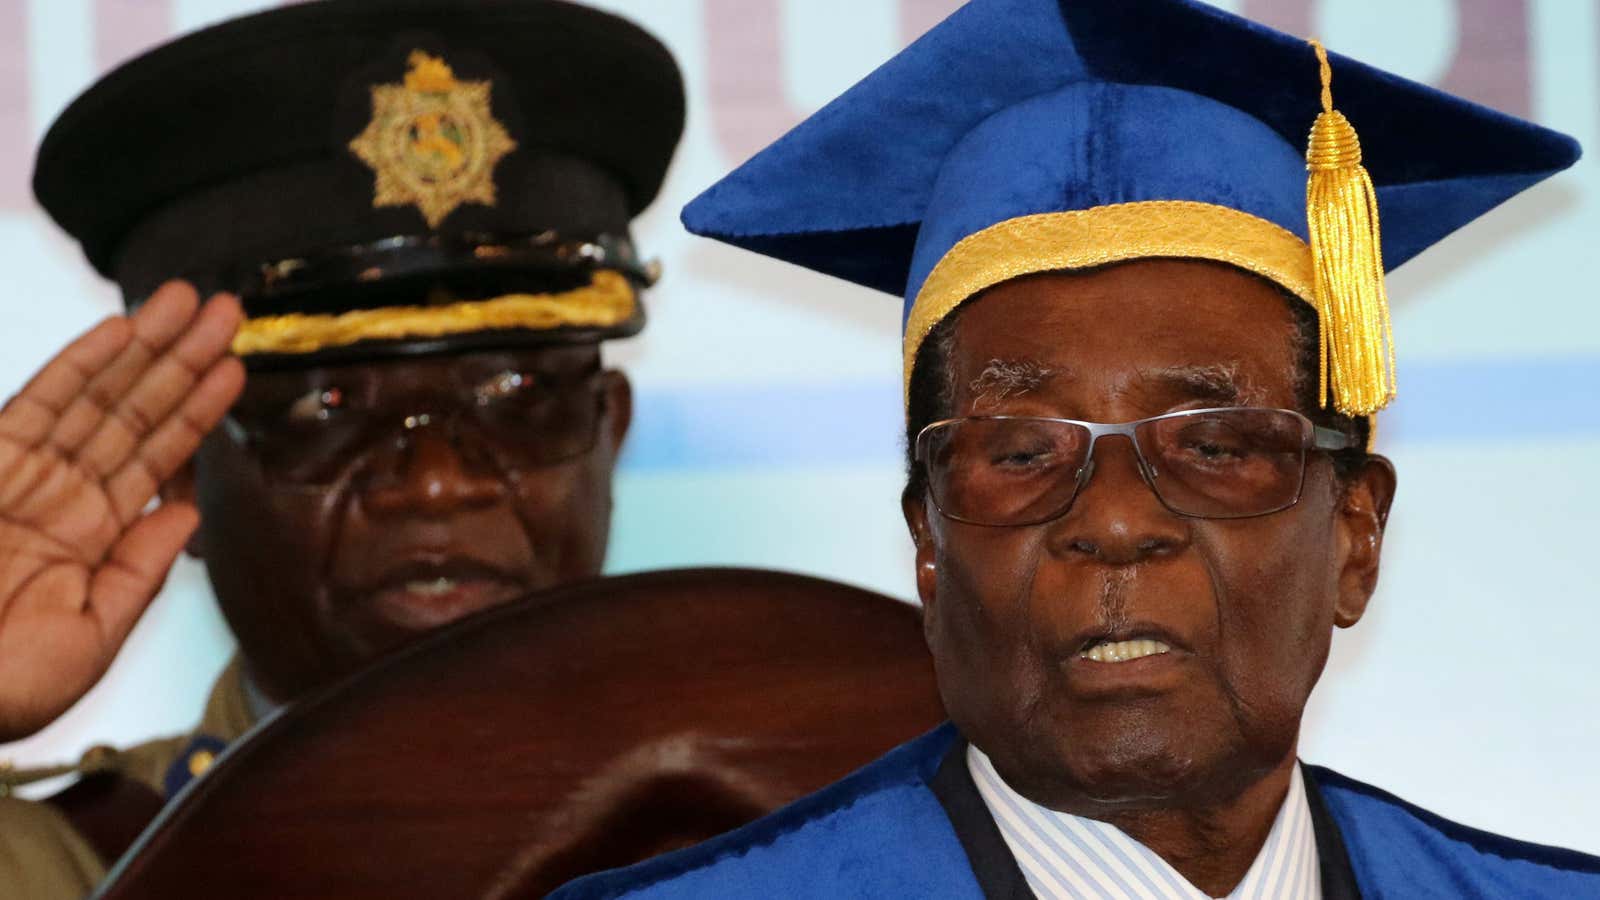 President Mugabe attends a university graduation ceremony in Harare on Nov. 17